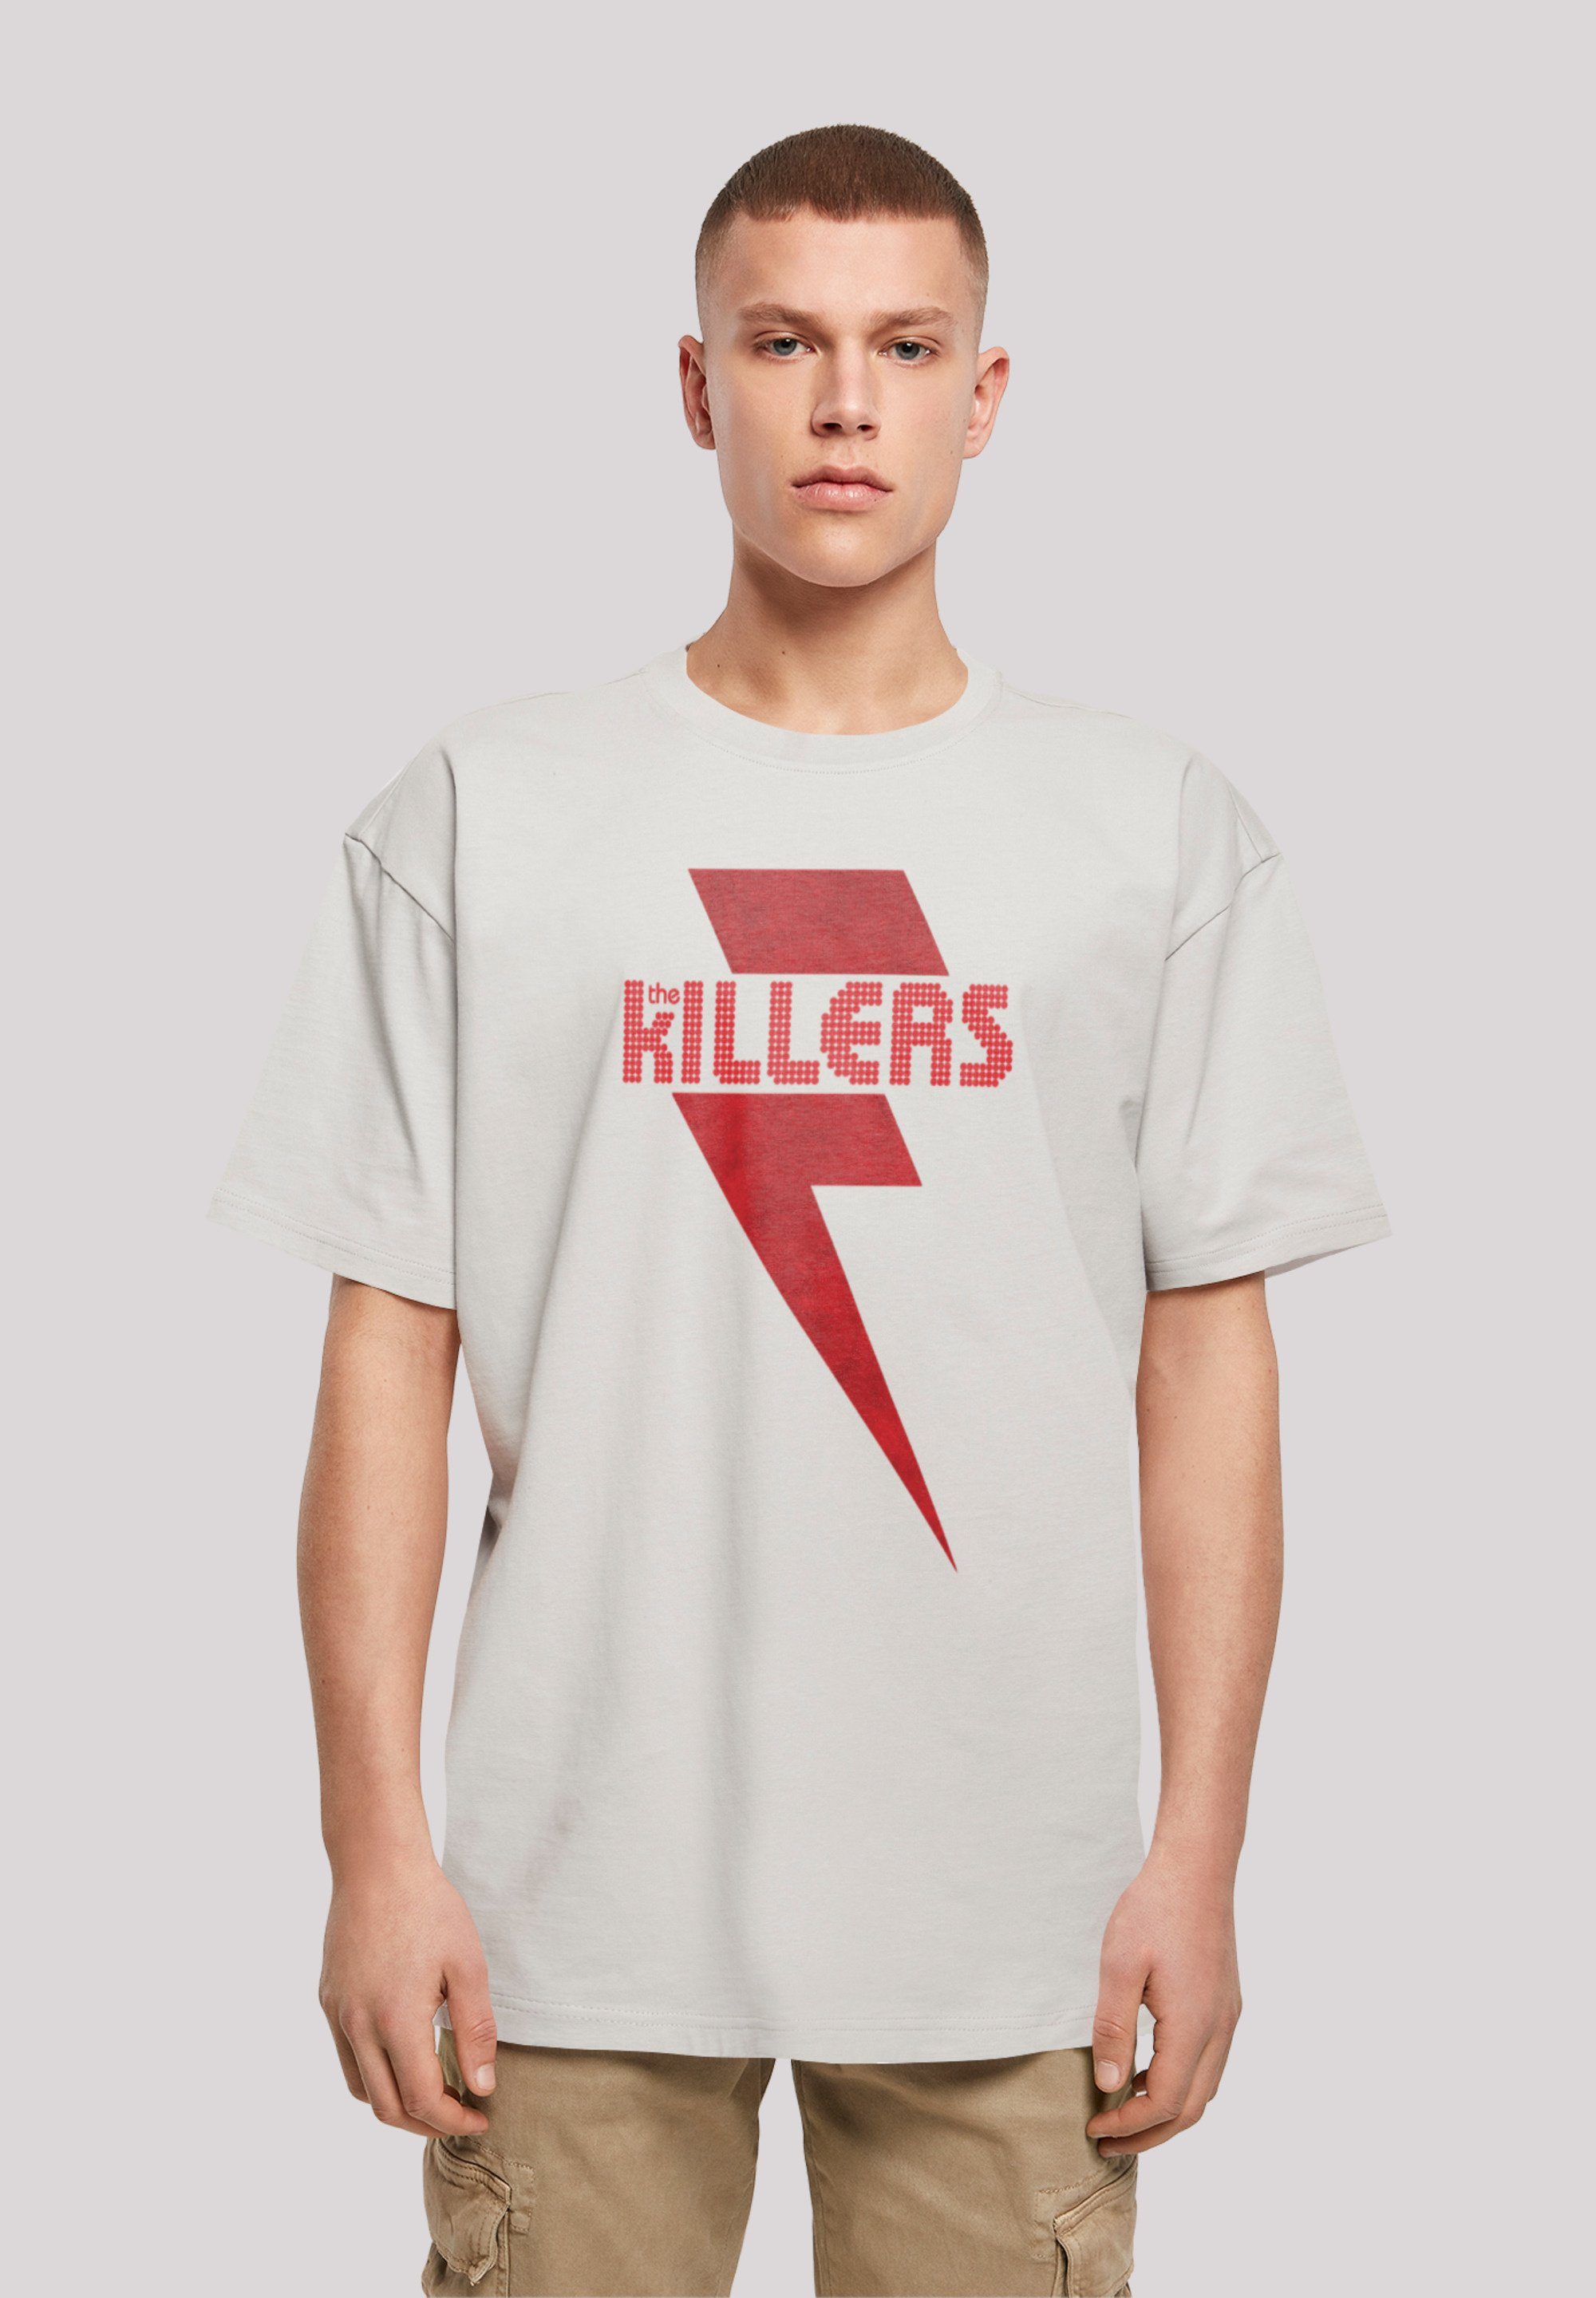 T-Shirt Band lightasphalt Bolt Killers Print The Red F4NT4STIC Rock